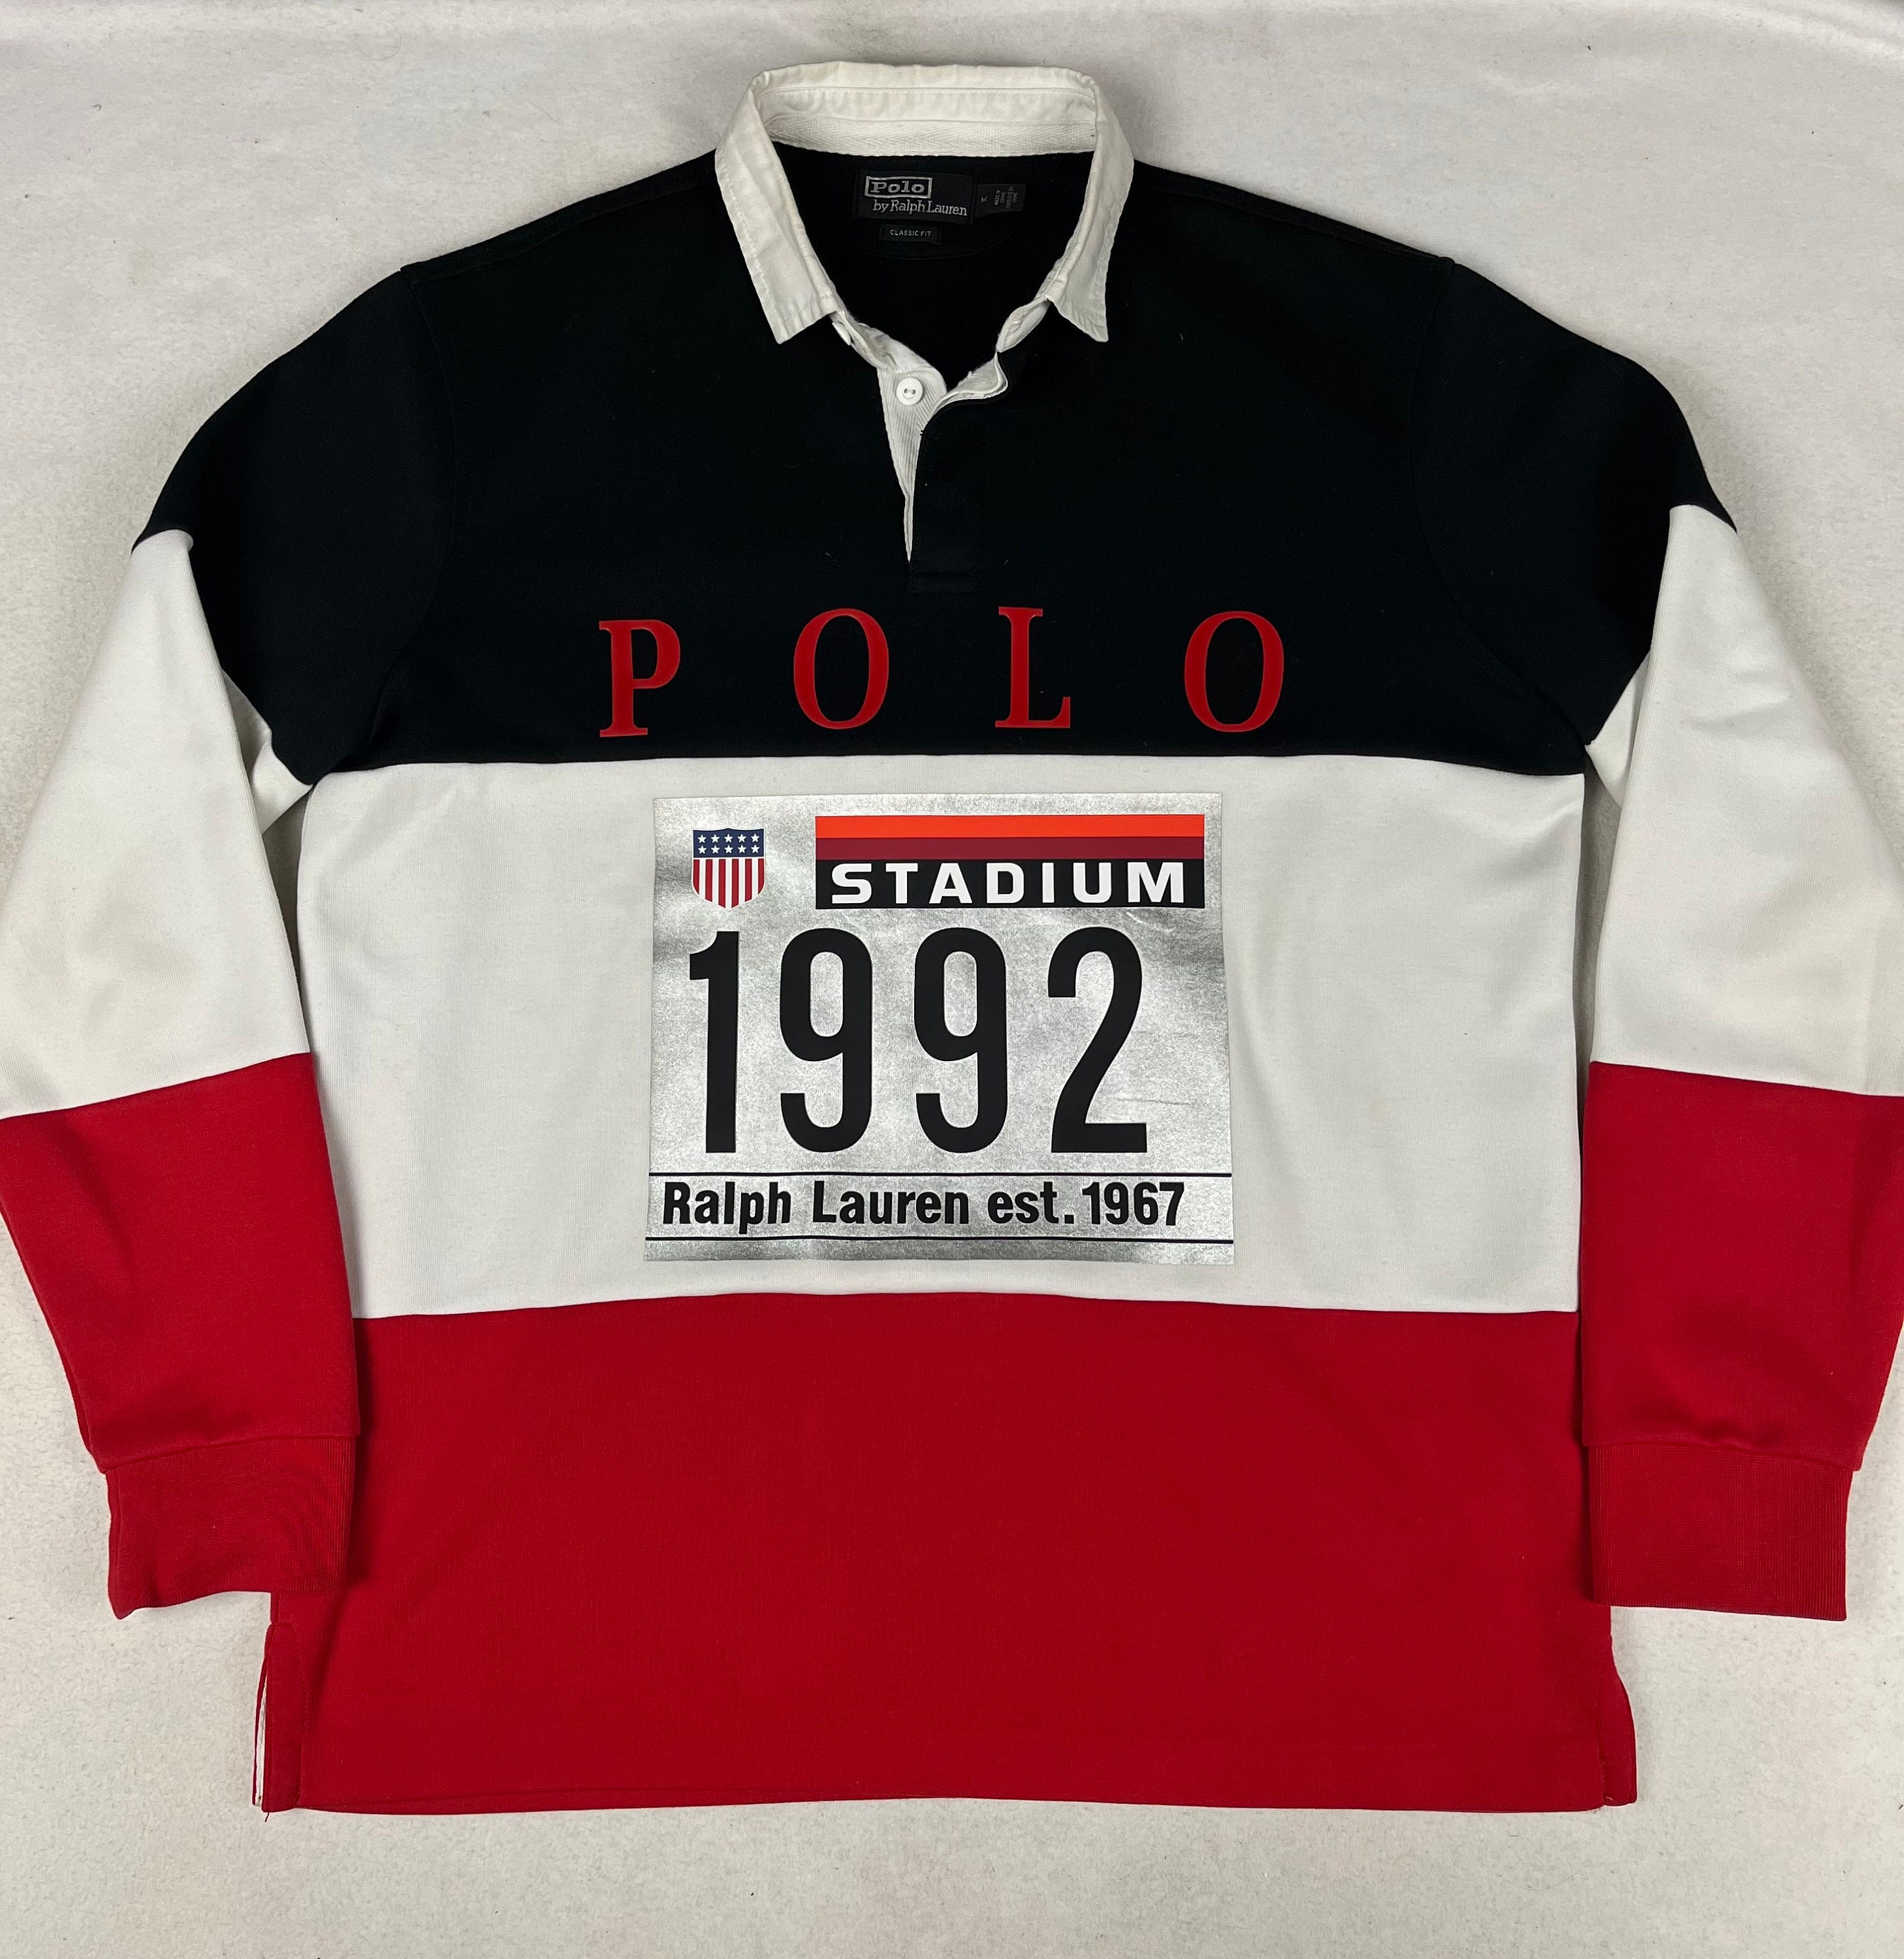 Polo Stadium 1992 - Etsy